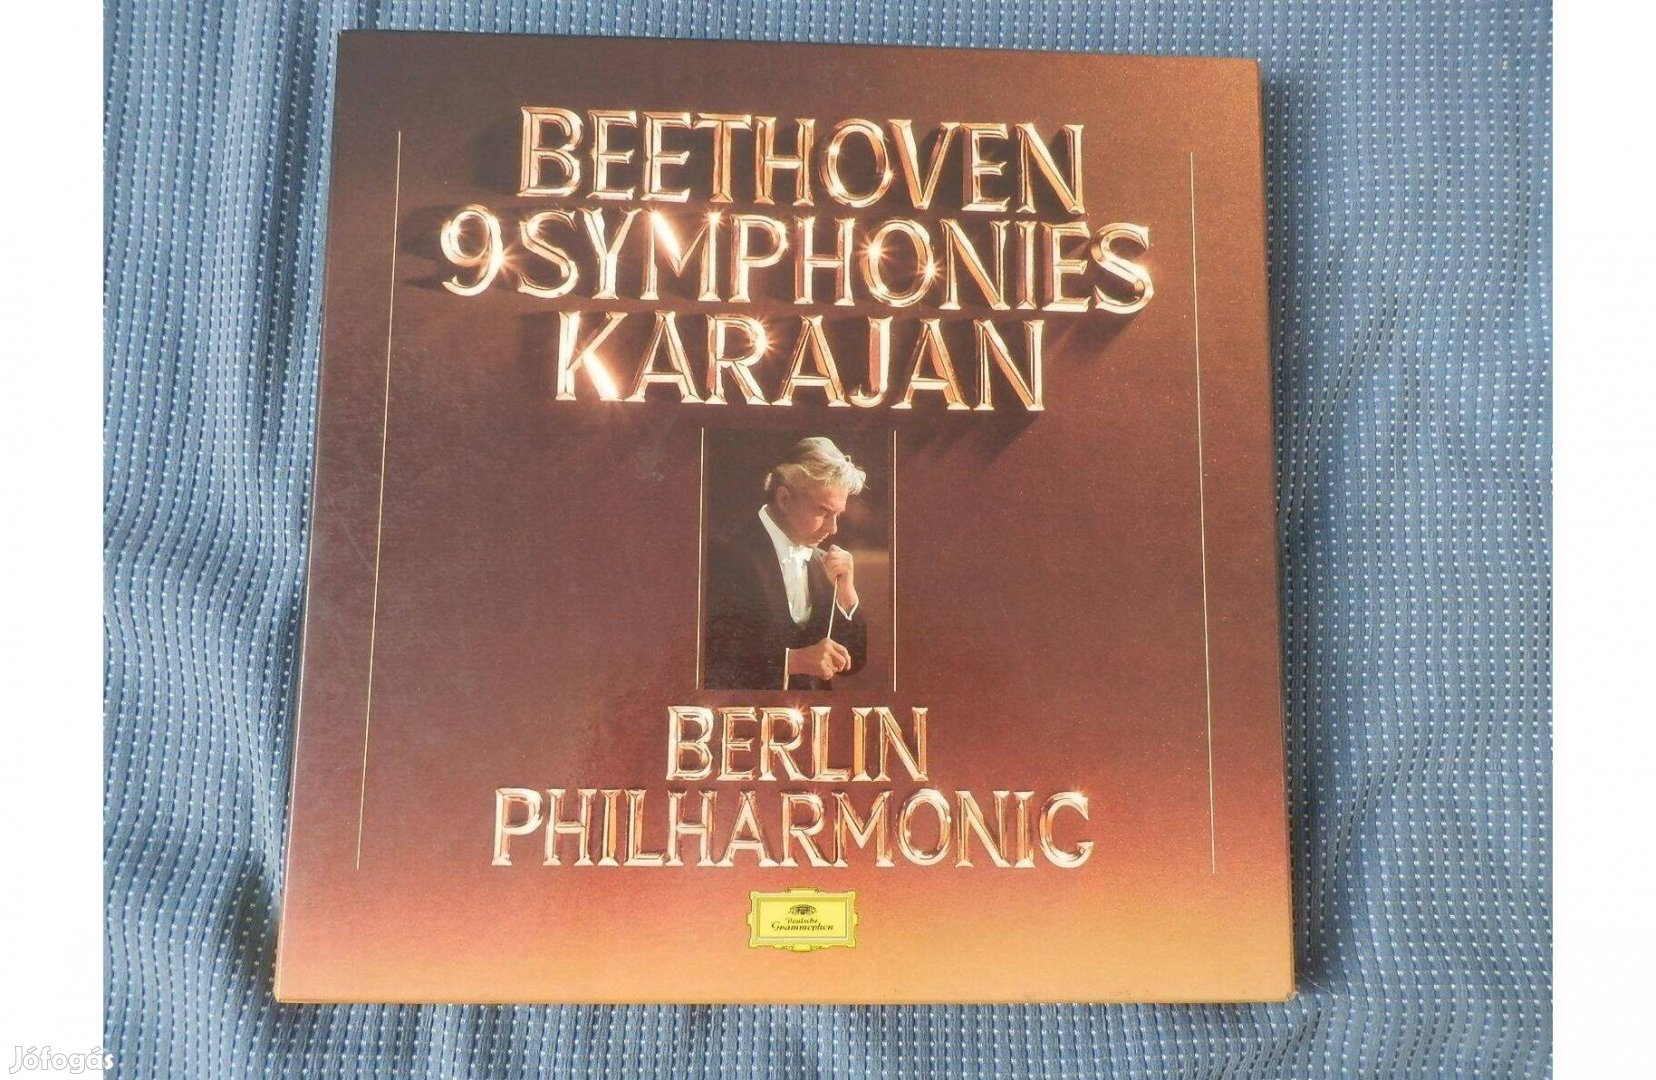 Beethoven 9 szimfoniája - Karajan (1976) DG - Hungaroton 8 LP